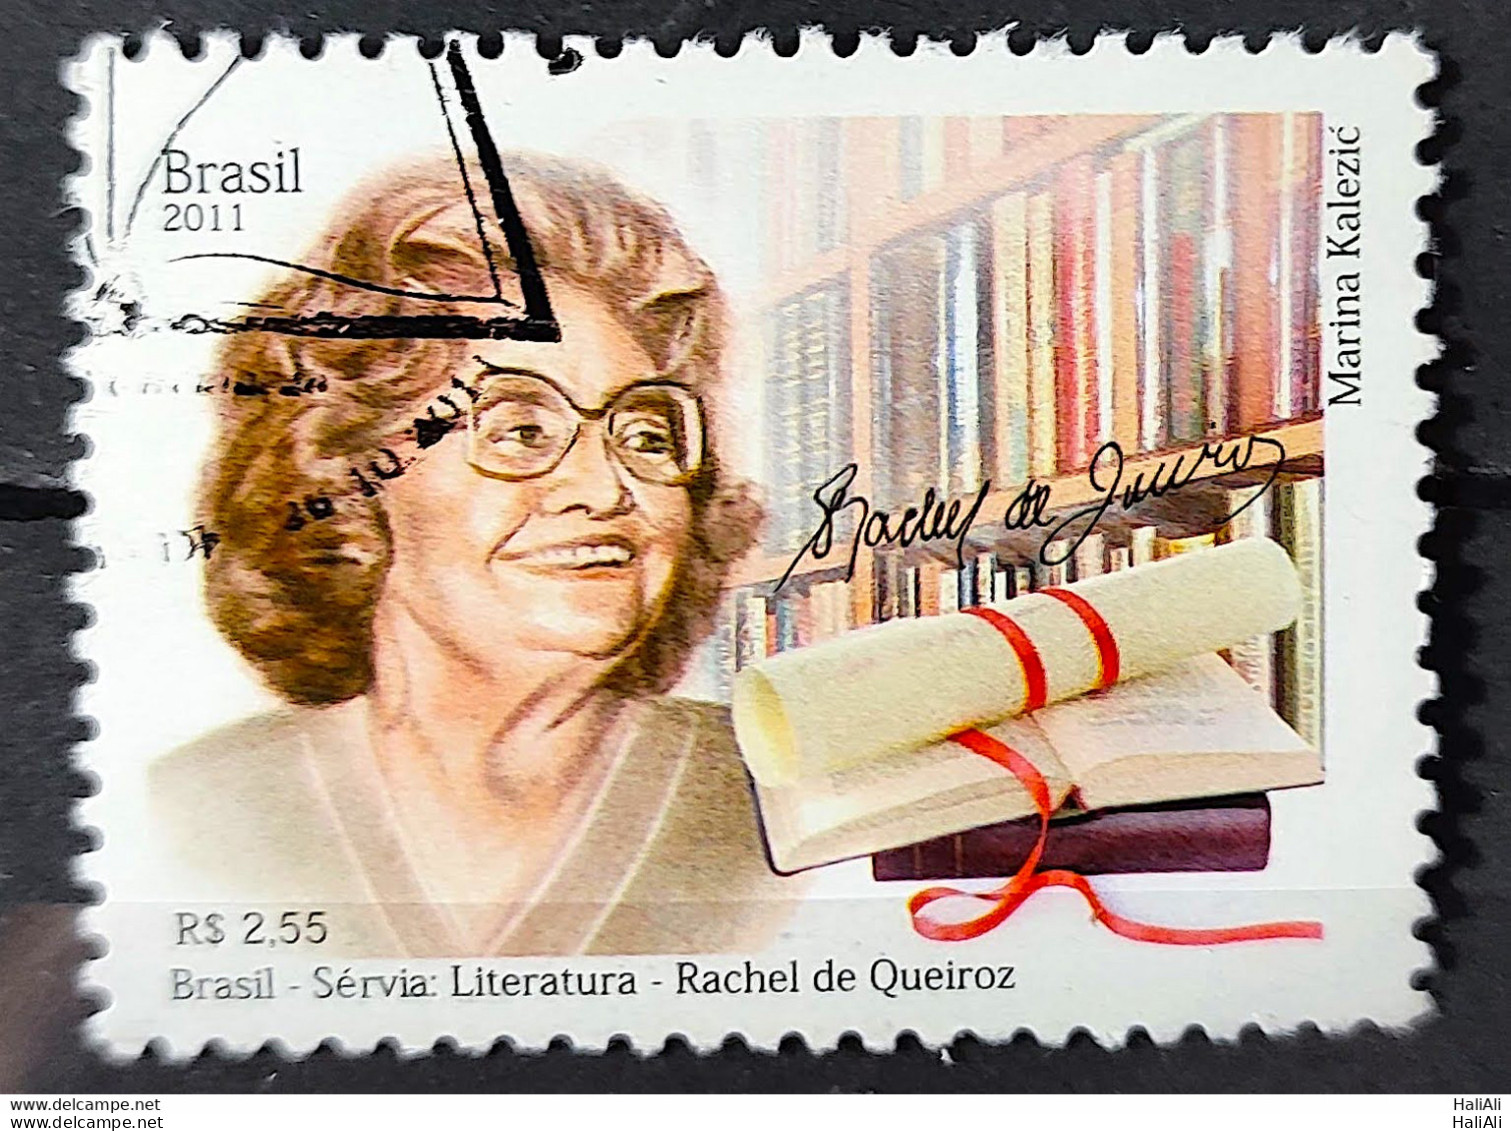 C 3149 Brazil Stamp Diplomatic Relations Servia Rachel De Queiroz Literature 2011 Circulated 1 - Oblitérés